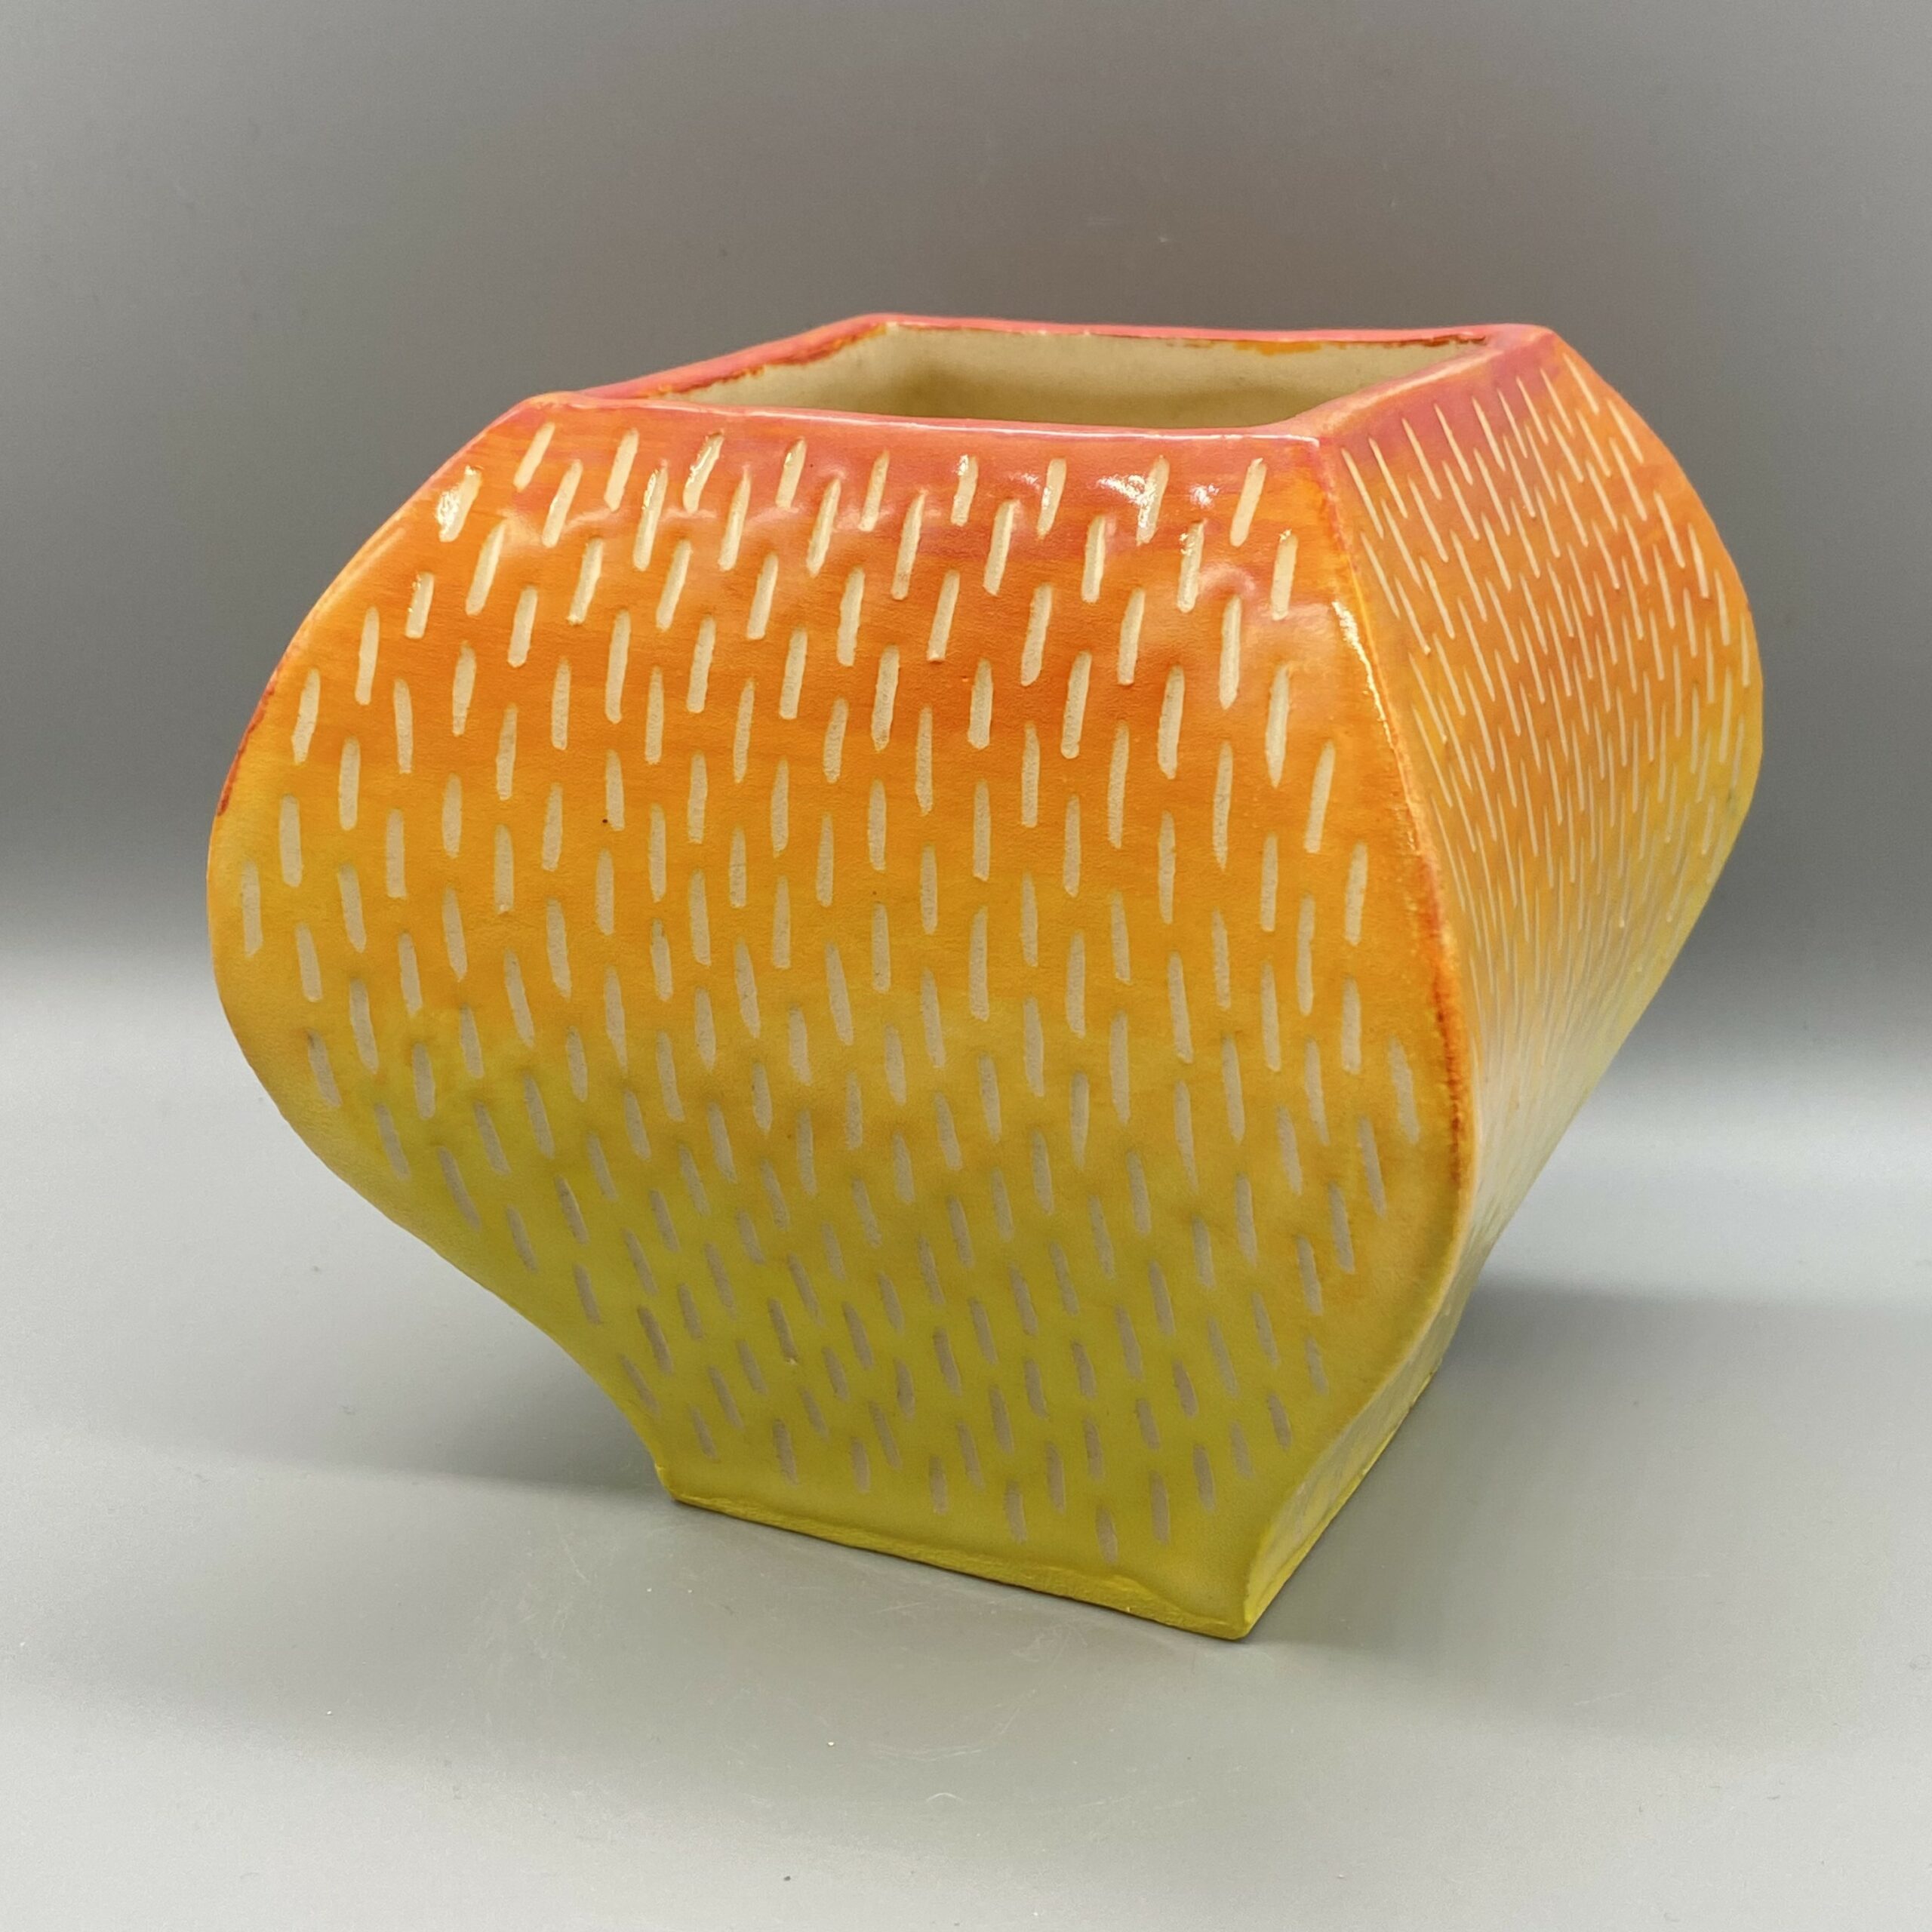 Featured image for “Orange & Lemon vase”